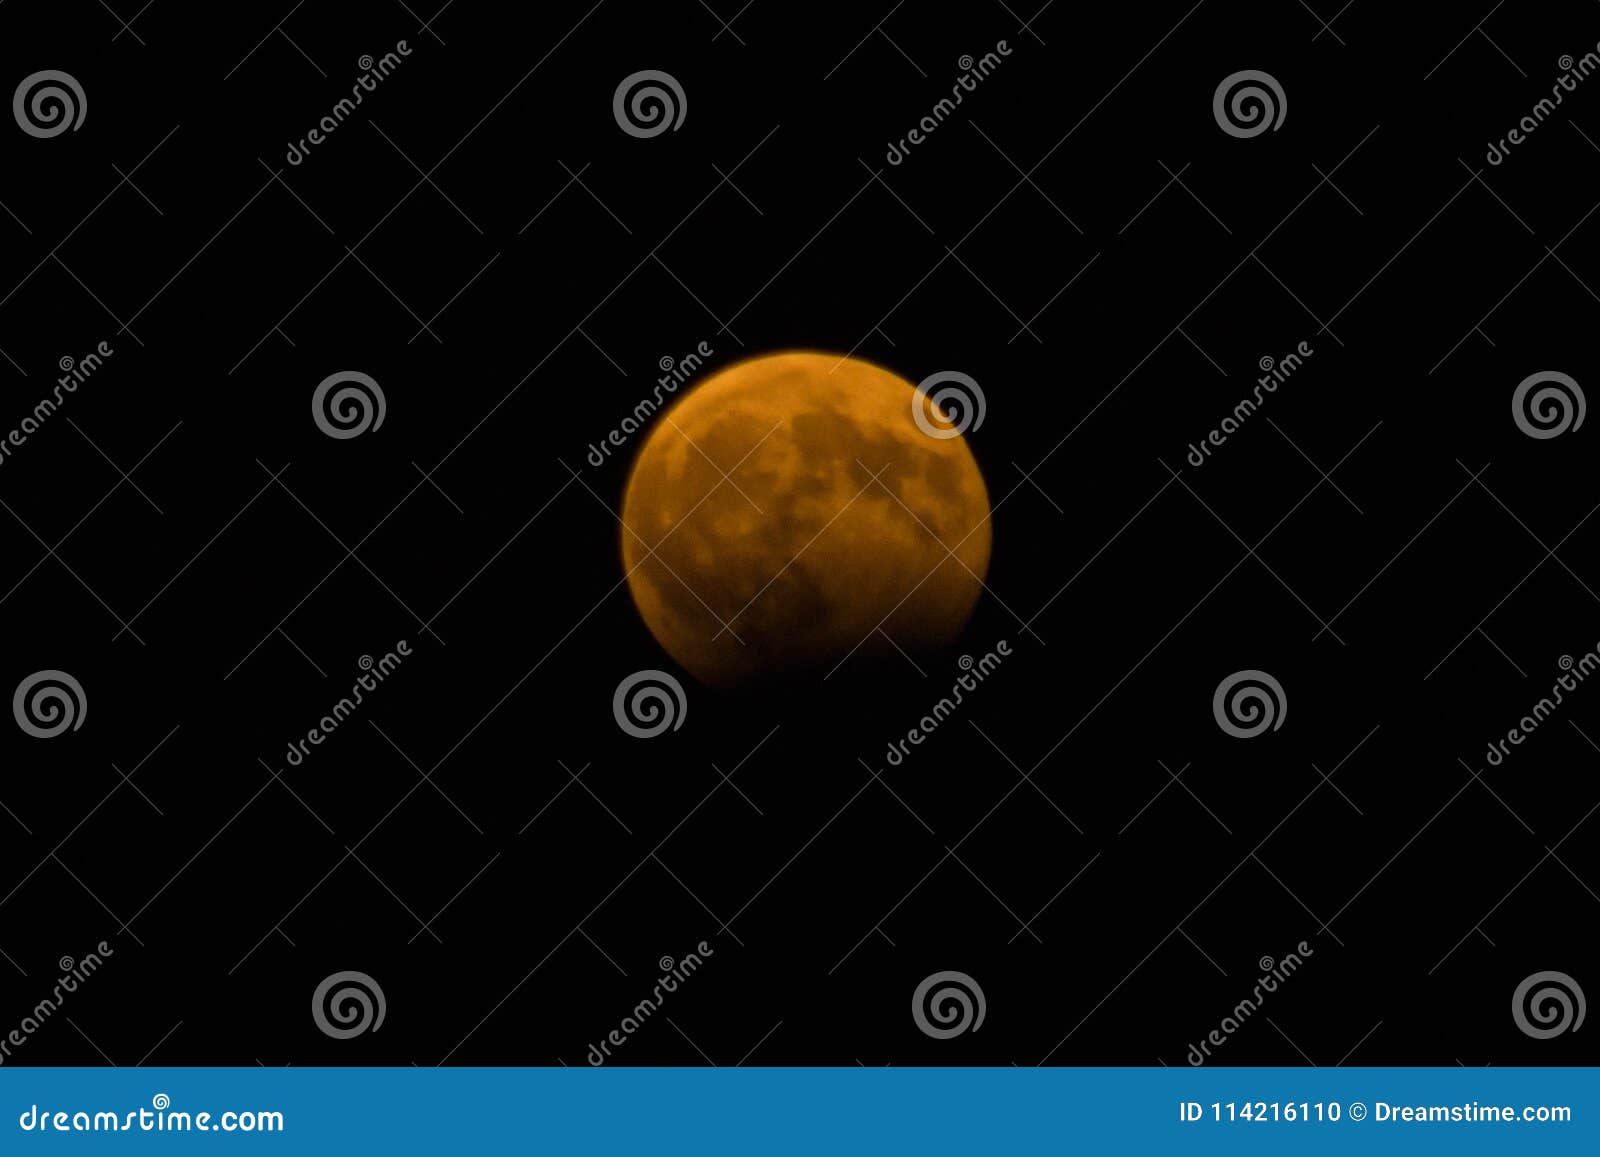 penumbral lunar eclipses, reddish moon